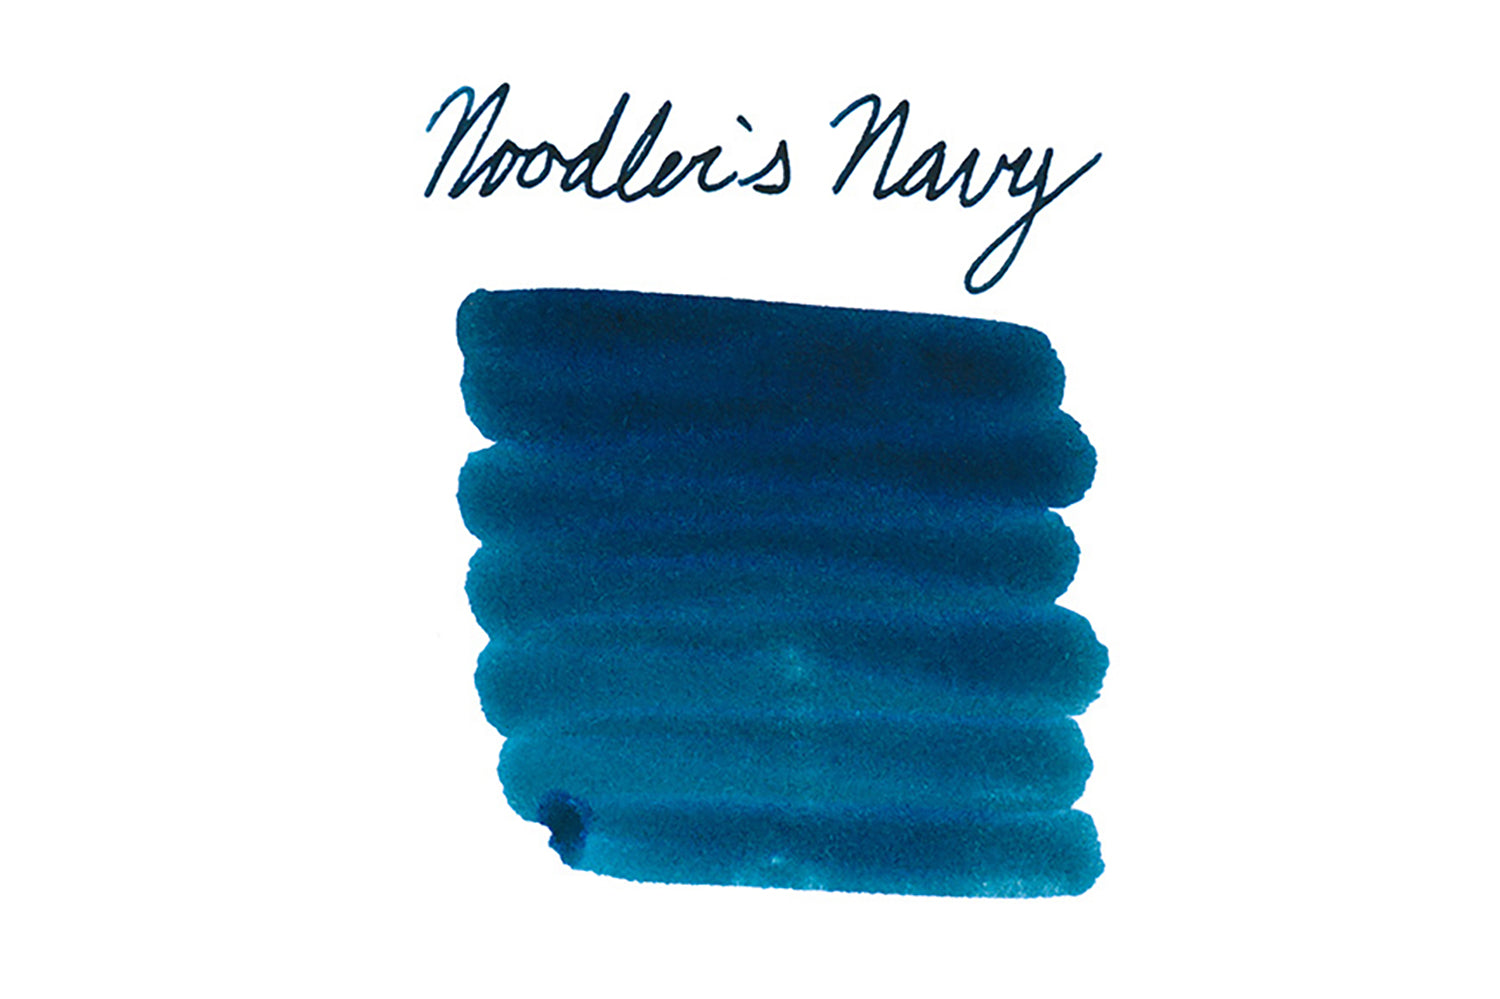 Noodler's Ink Color Guide : r/fountainpens